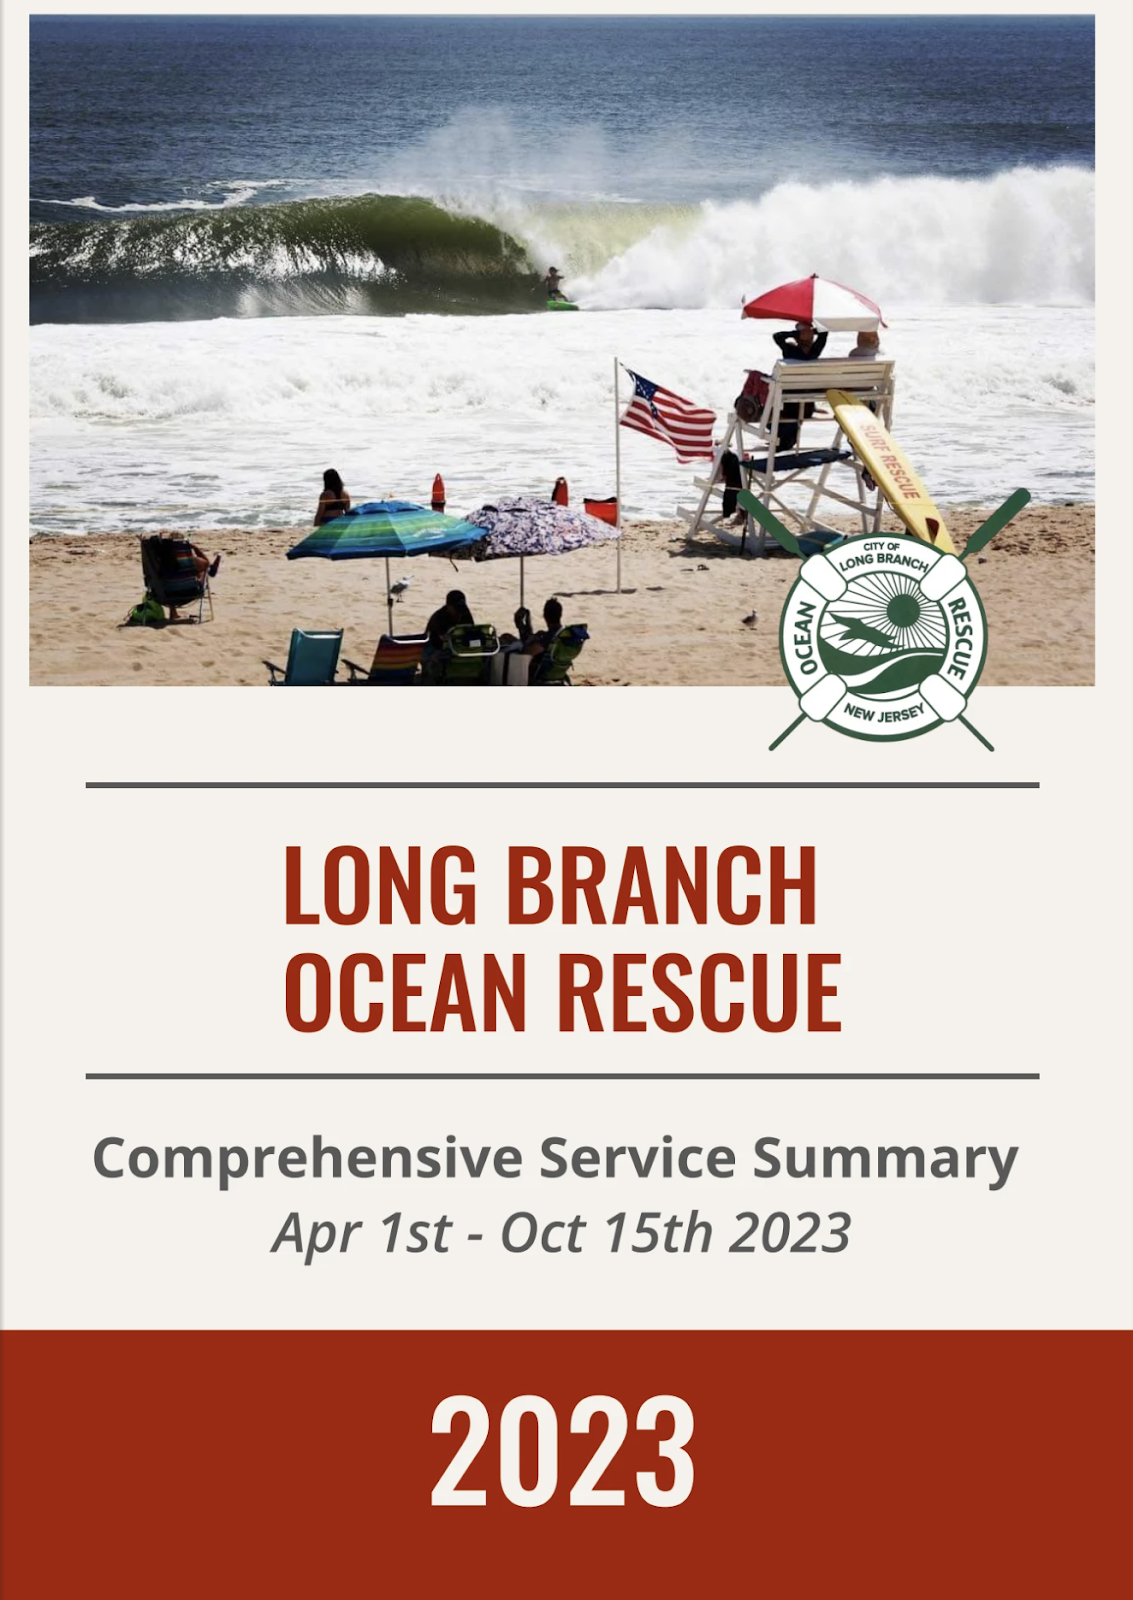 Long Branch Oceanfest